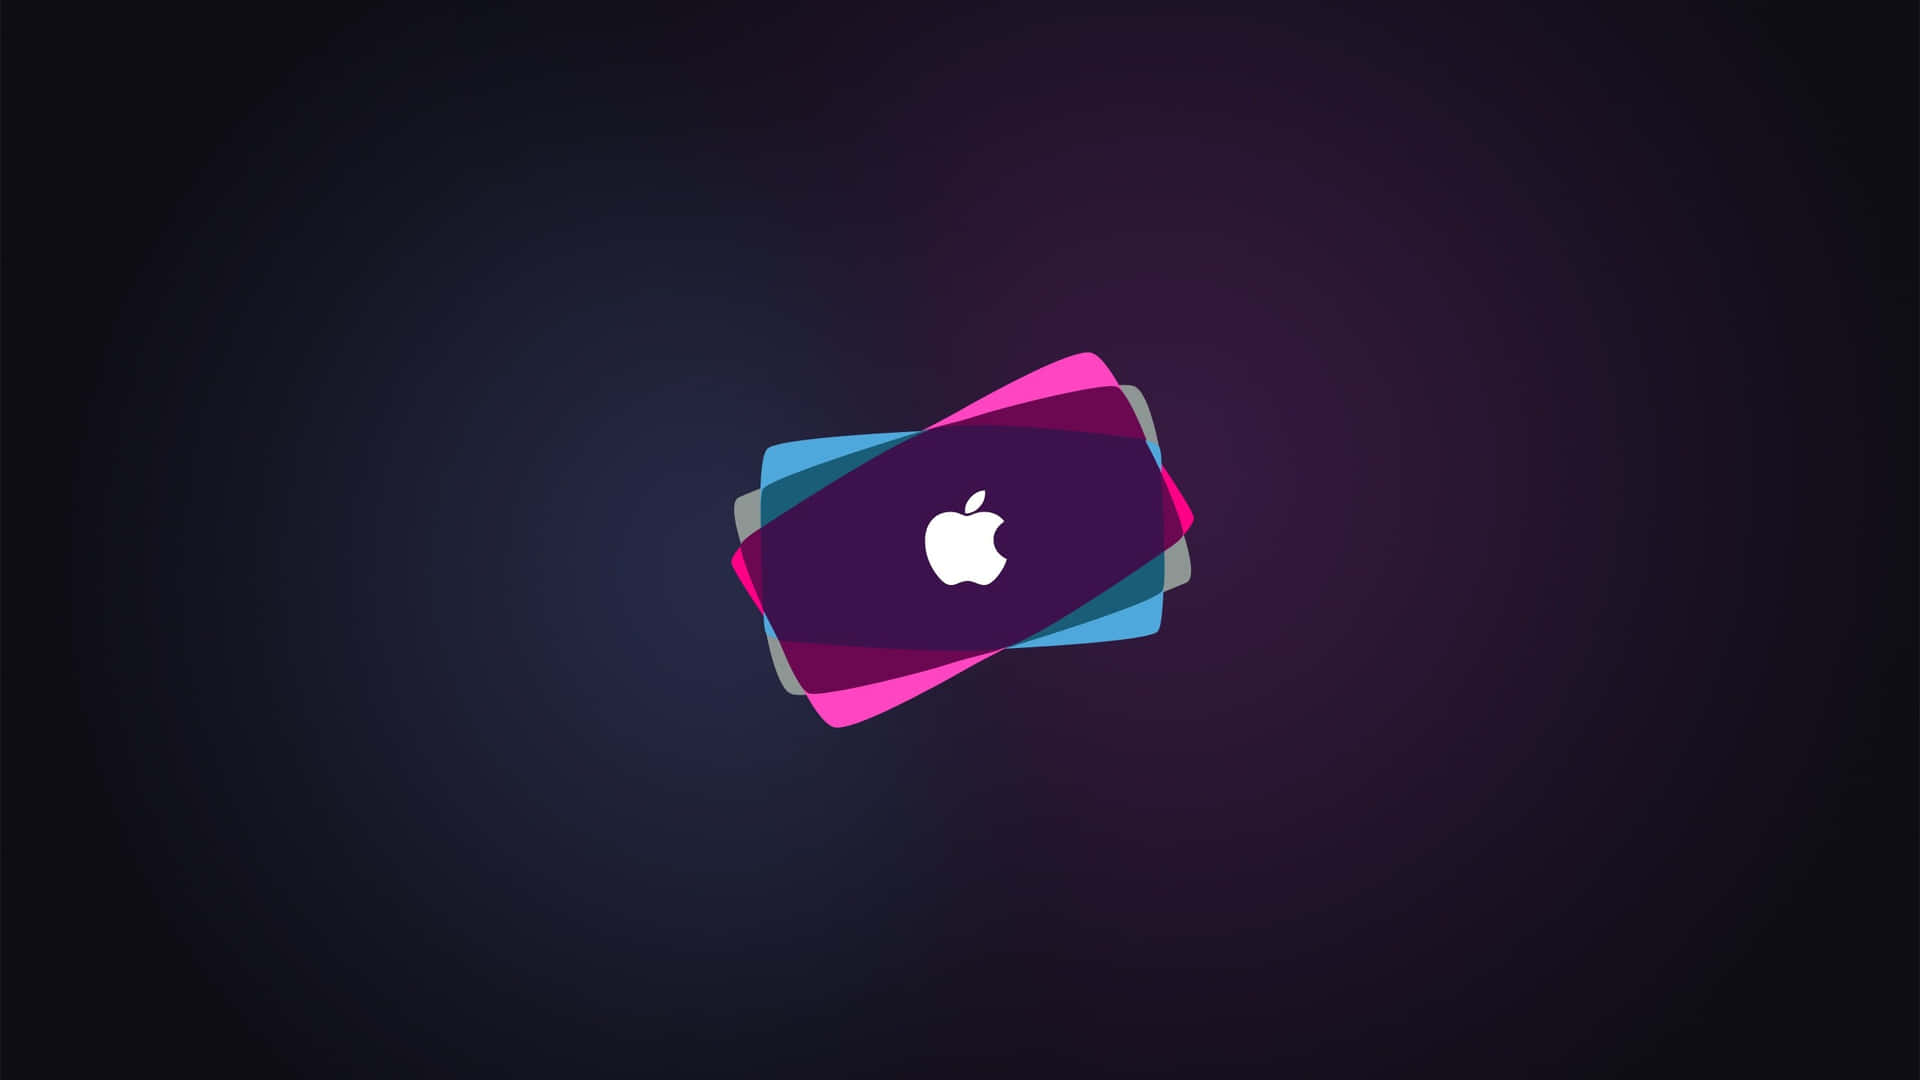 Retro Apple-logo 2560 X 1440 Wallpaper